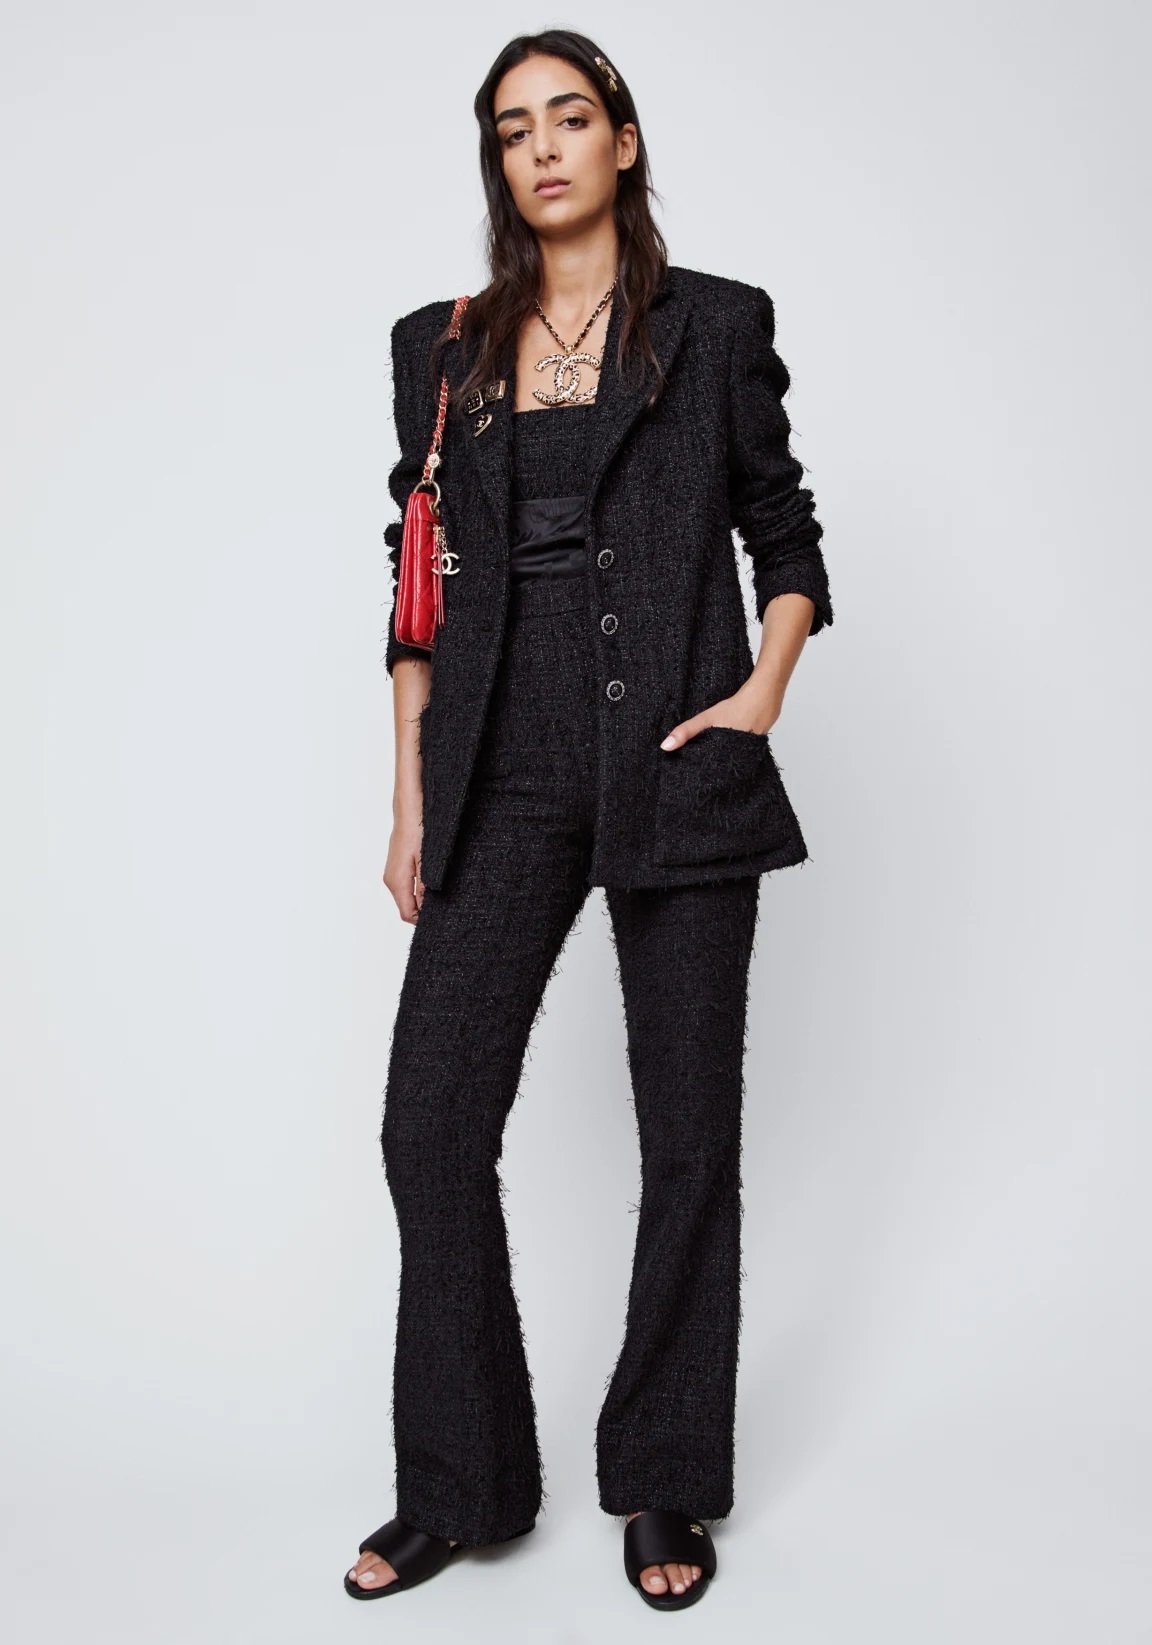 Chanel Cotton Tweed Jacket in Black.jpg